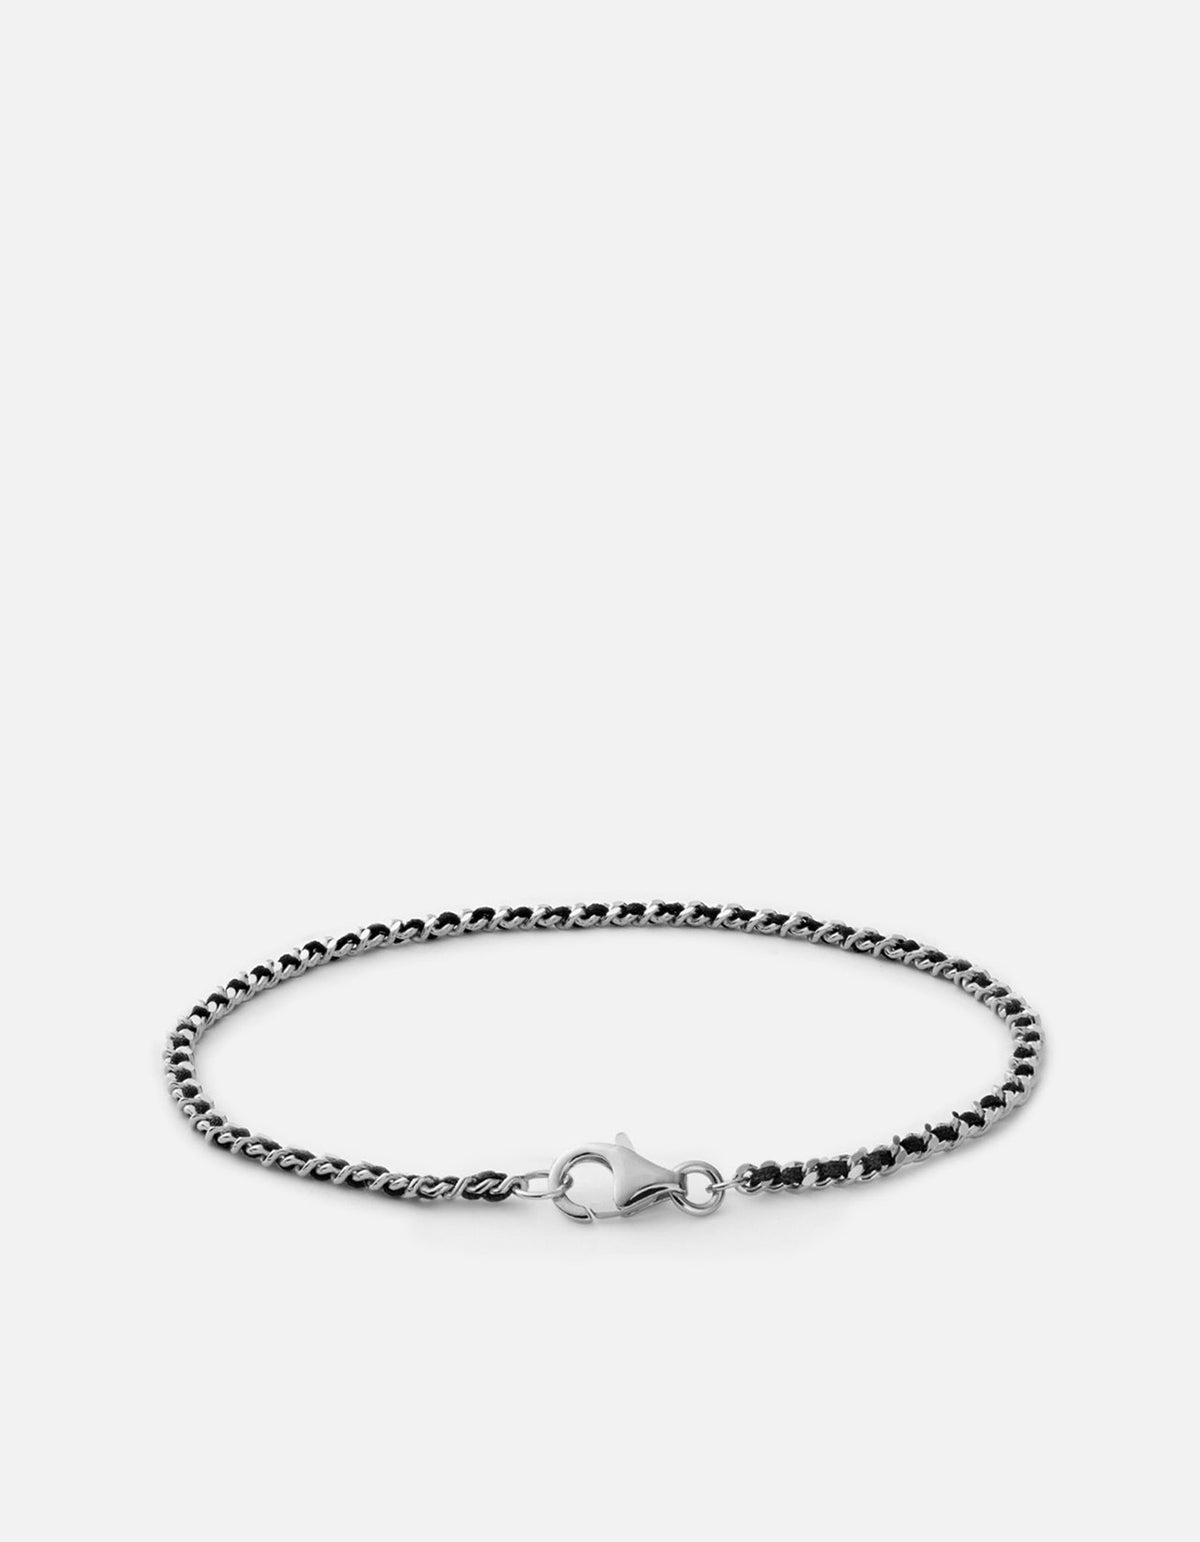 Miansai 2mm Braided Chain Bracelet Sterling Silver